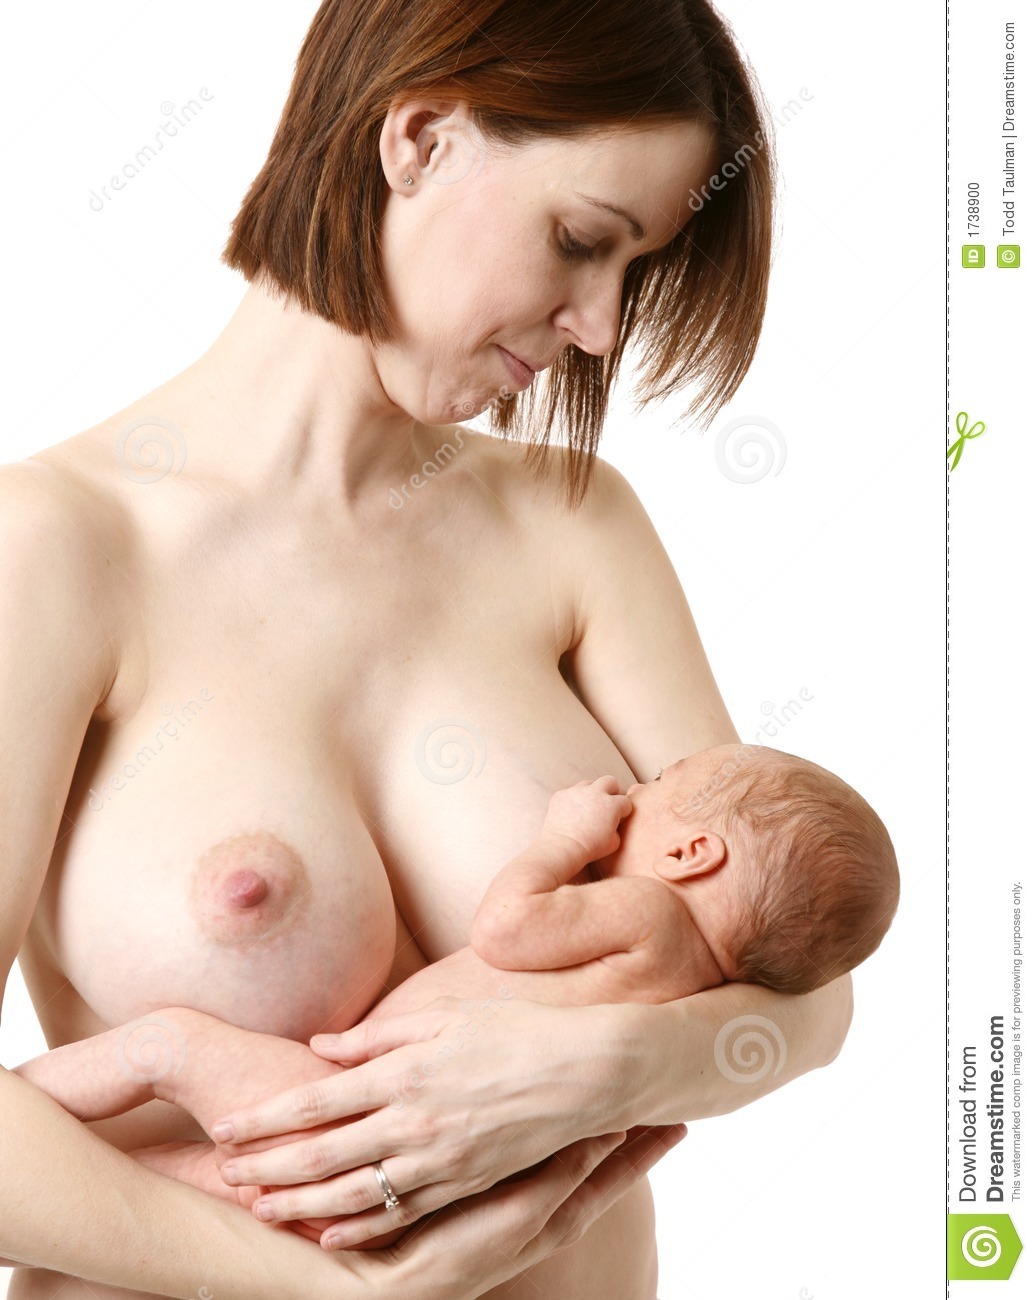 Breast baby